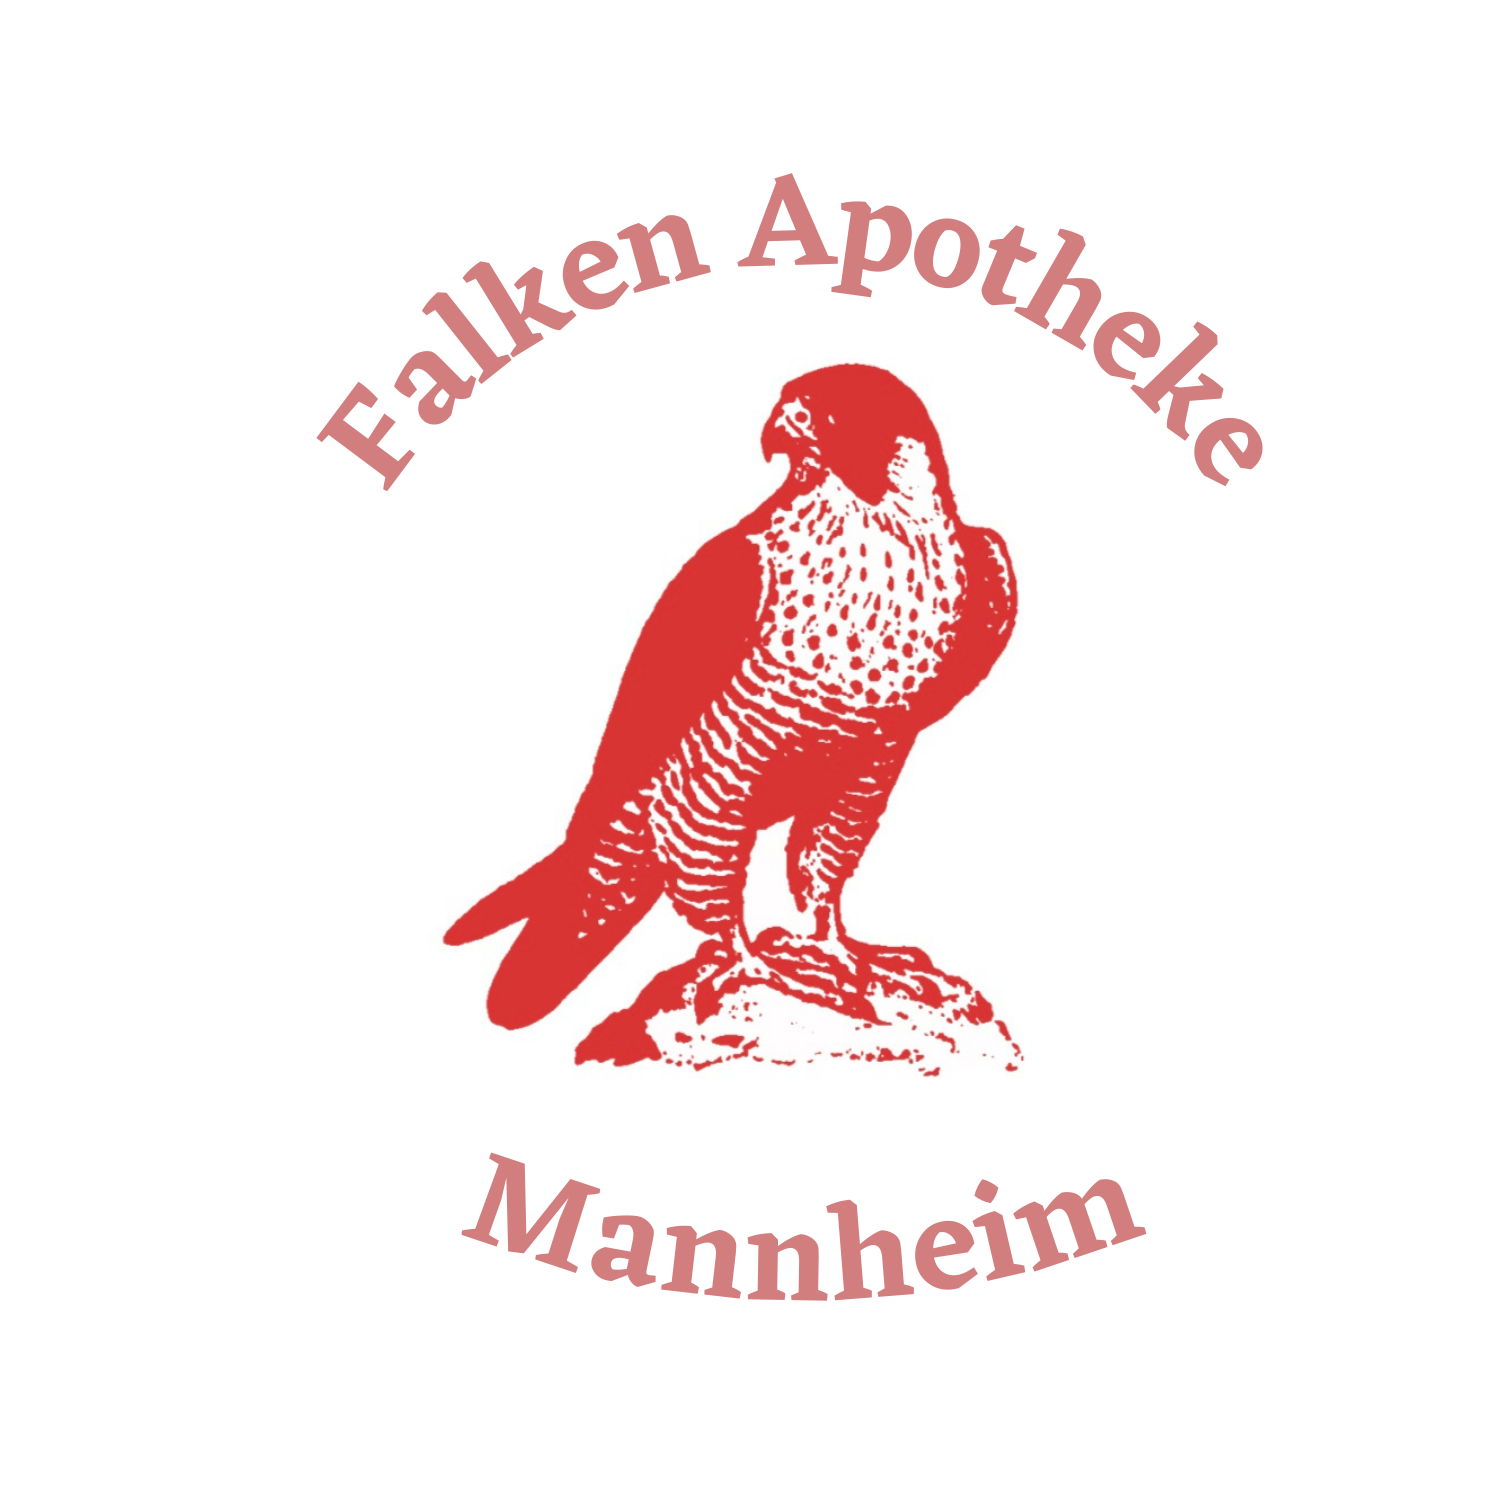 Logo Logo der Falken-Apotheke